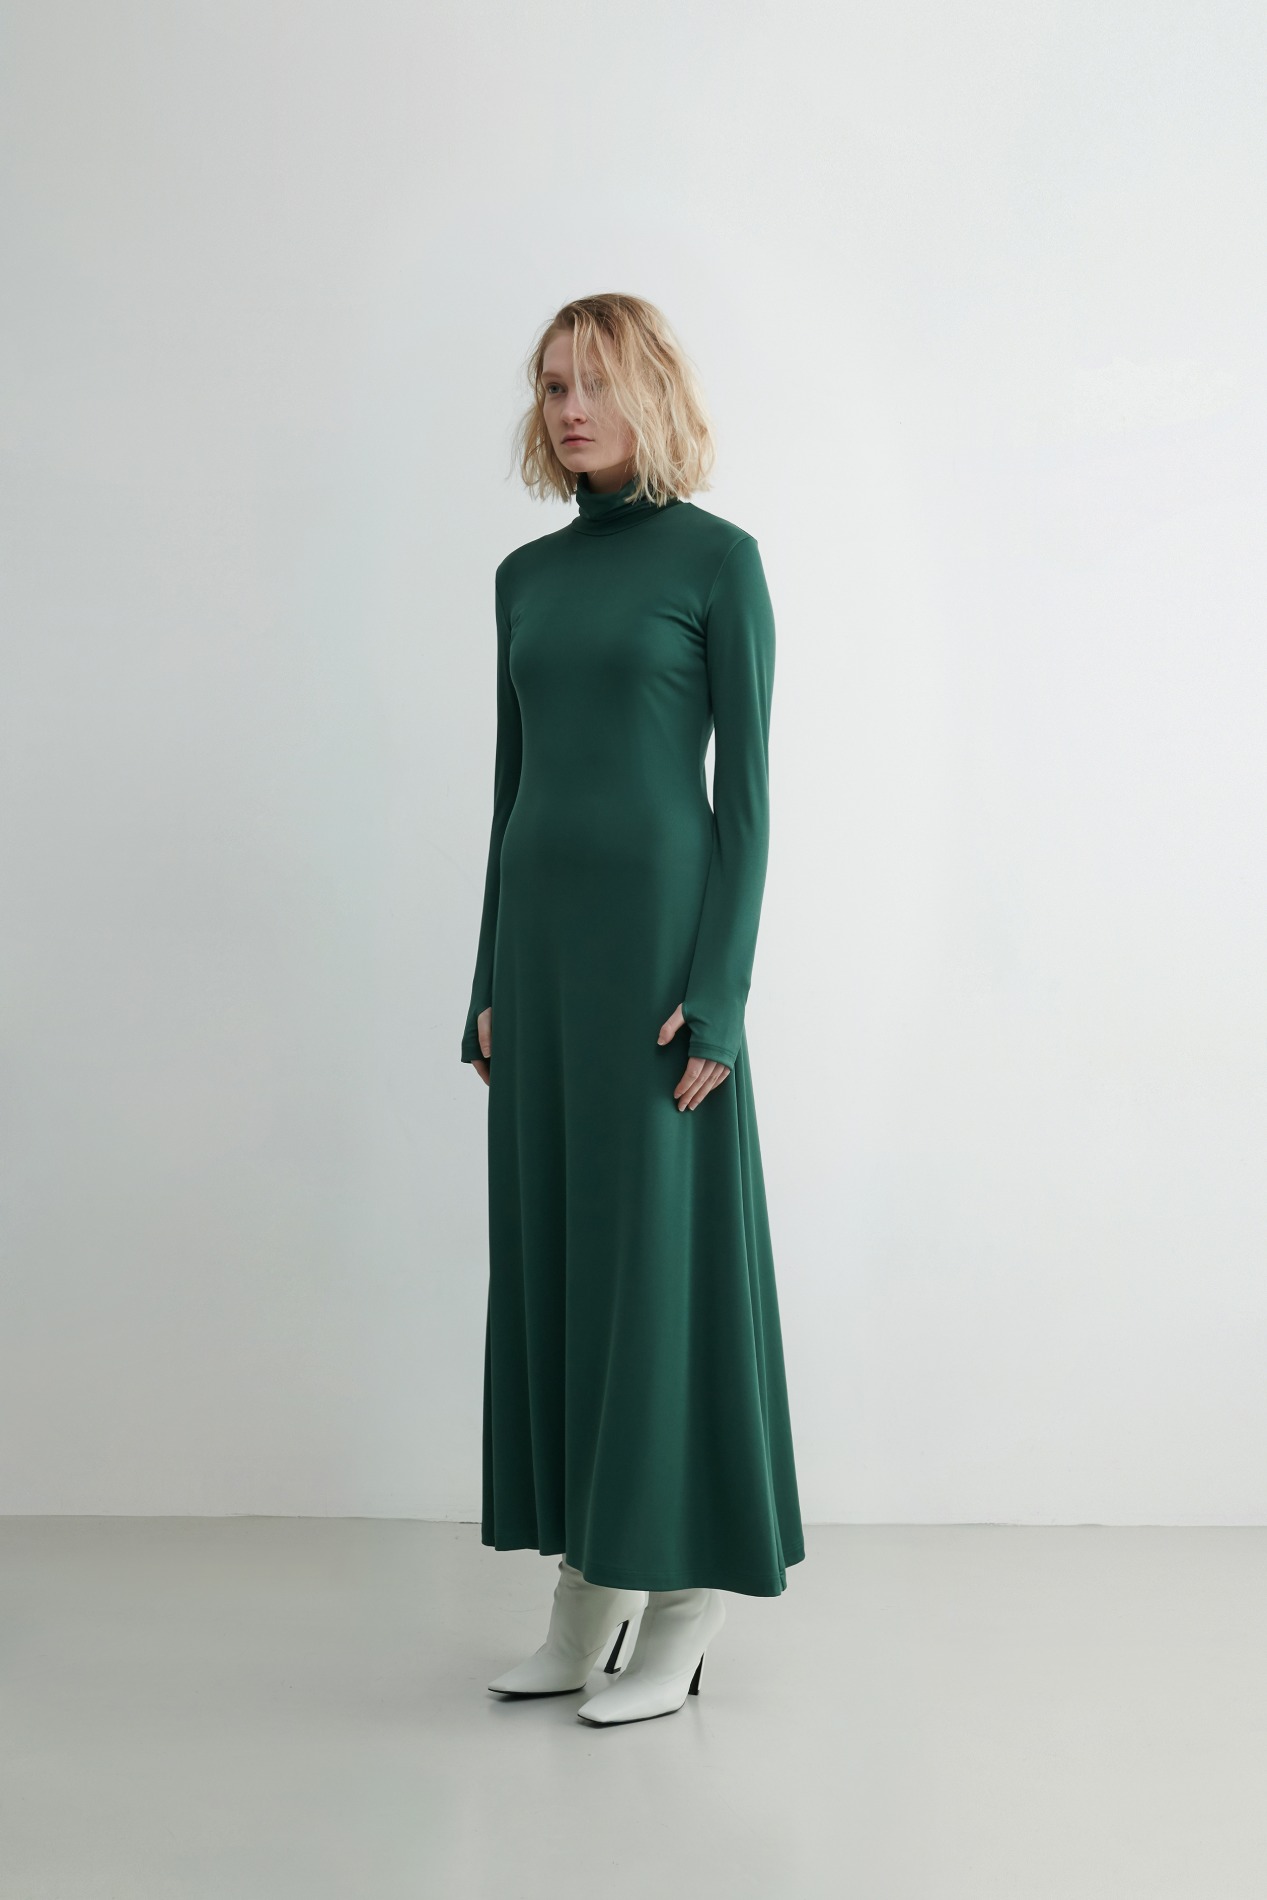 Green maxi dress